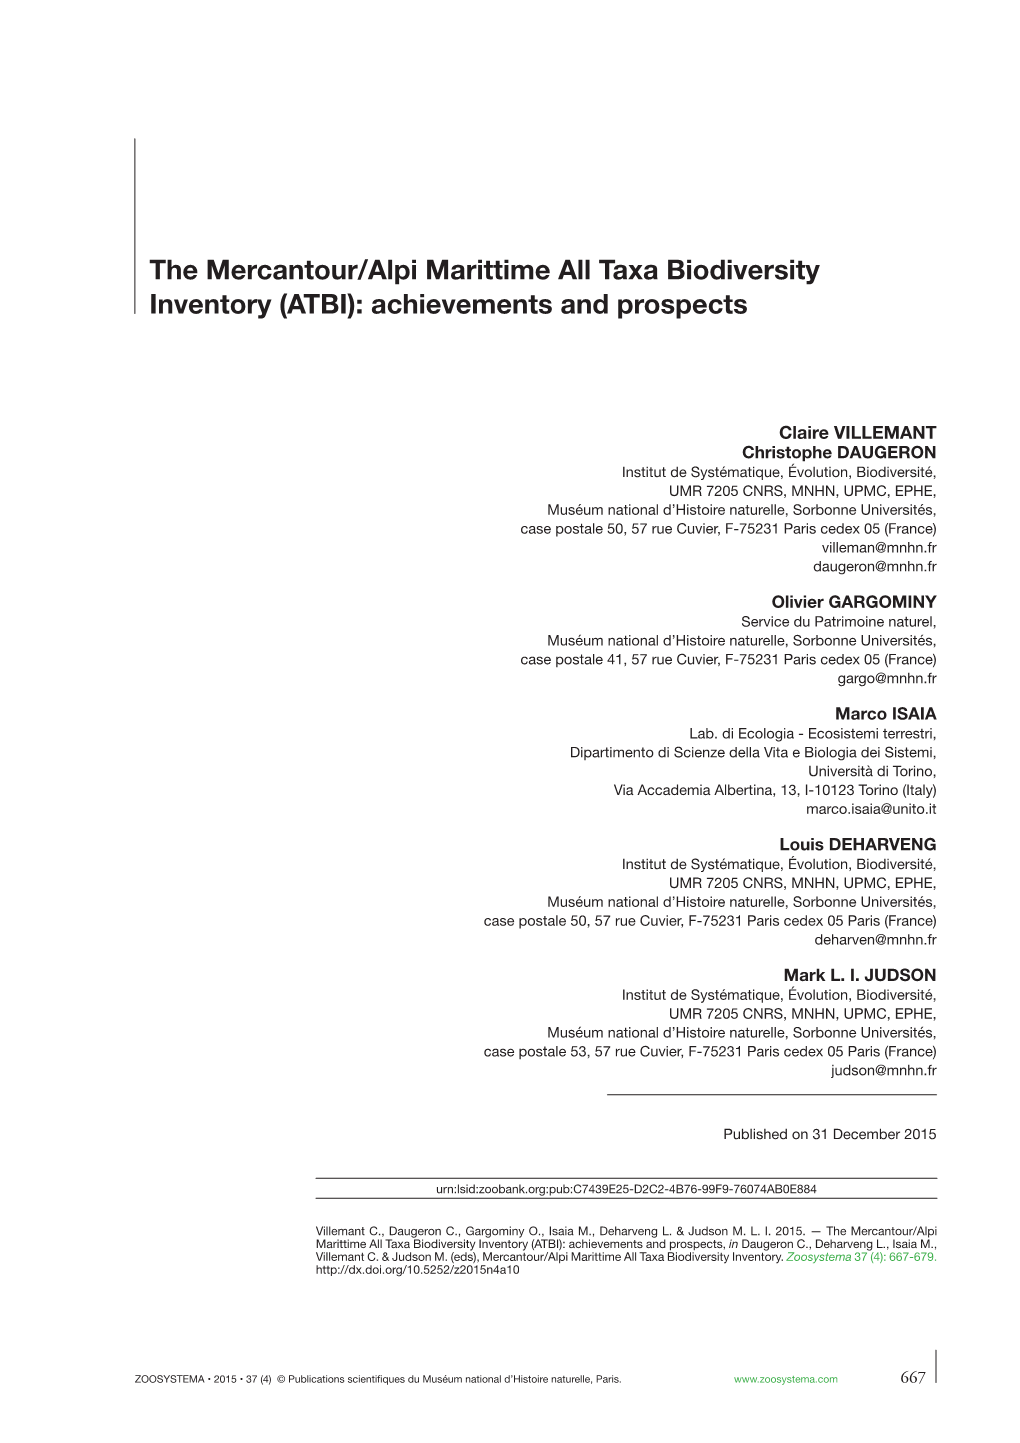 The Mercantour/Alpi Marittime All Taxa Biodiversity Inventory (ATBI): Achievements and Prospects